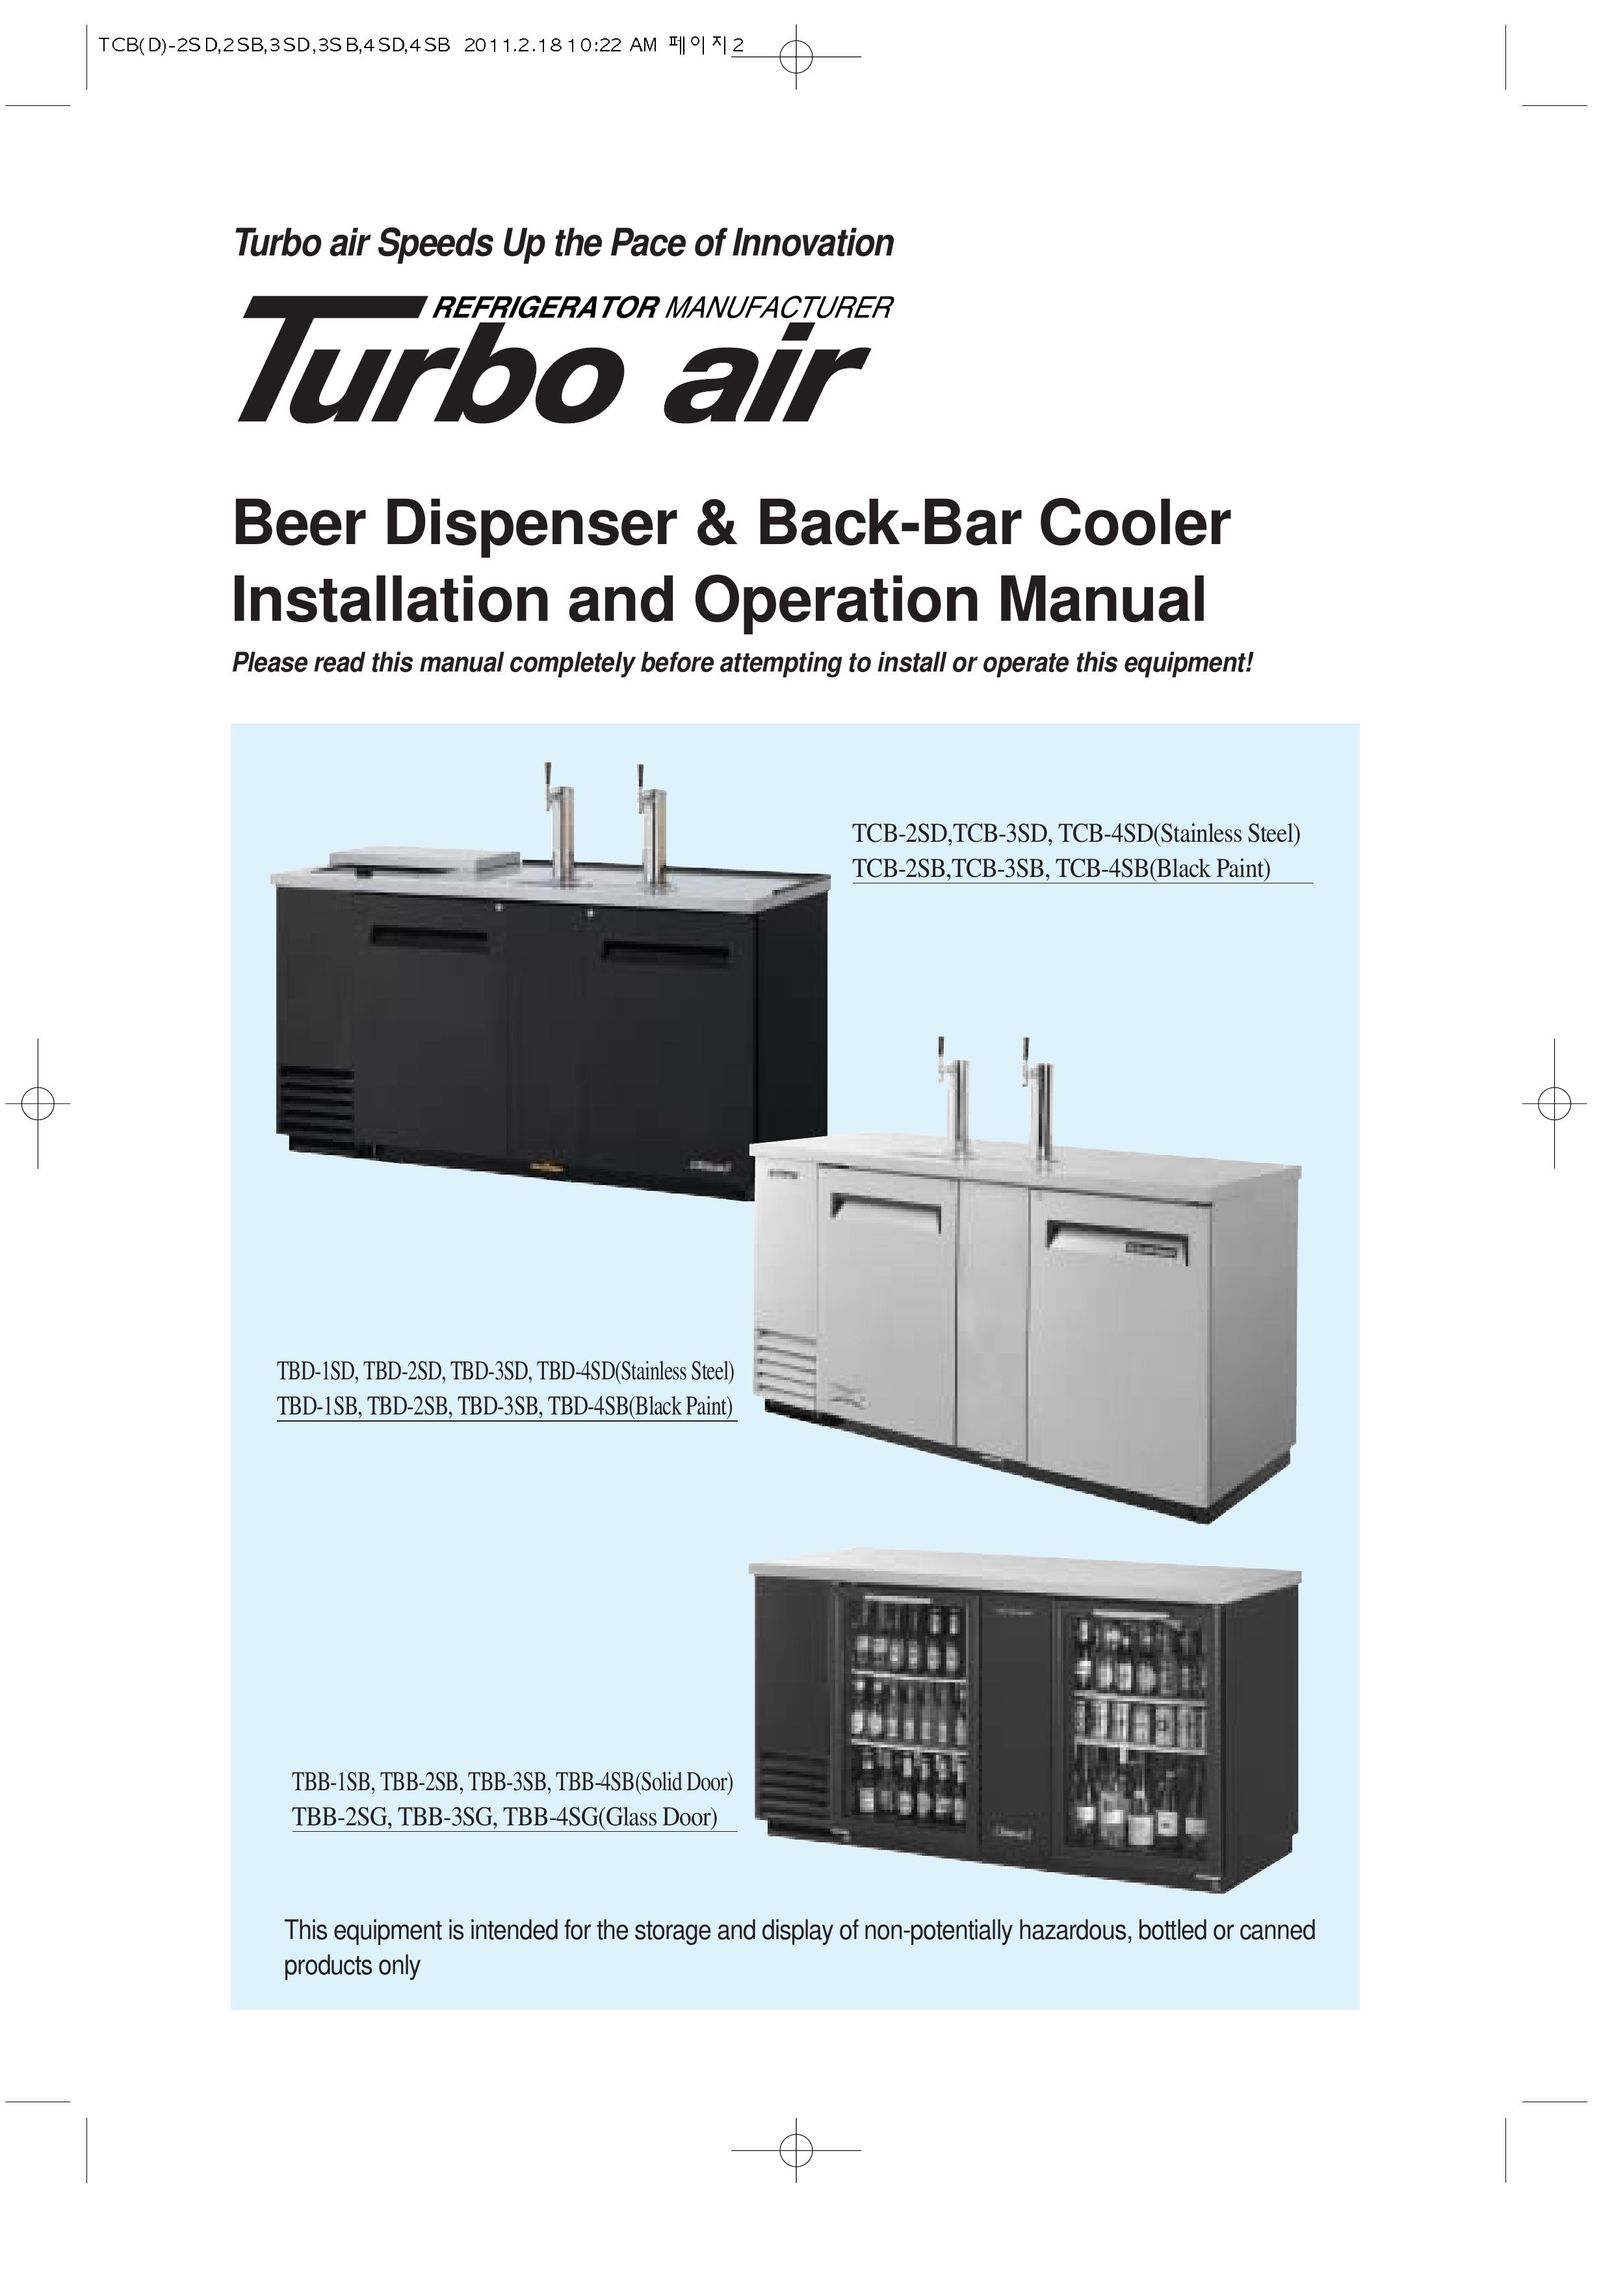 Turbo Air TCB-4SD Beverage Dispenser User Manual